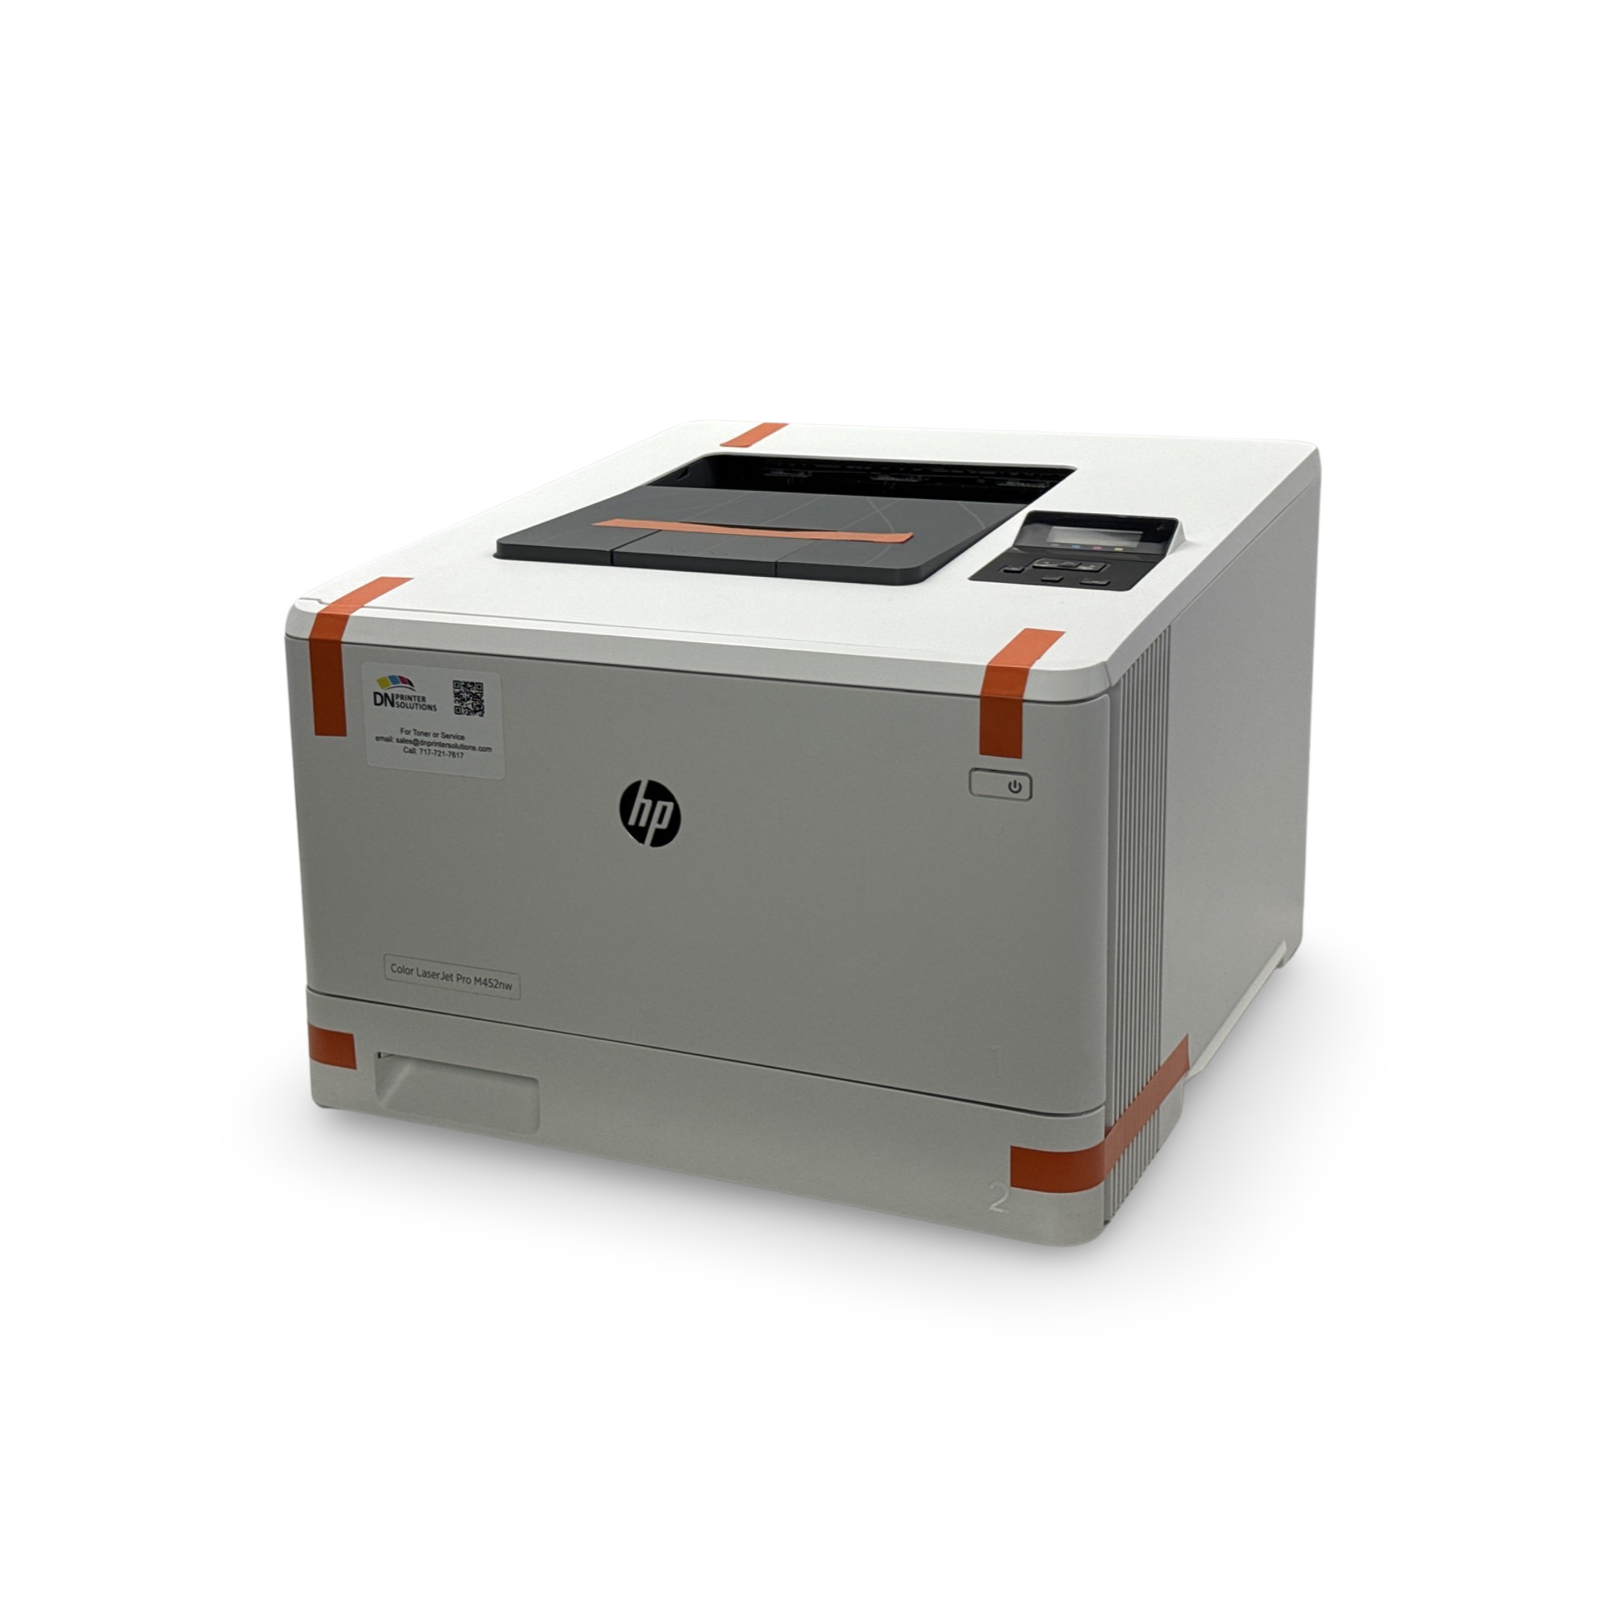 HP Color LaserJet Pro M452nw Printer CF388A Refurbished